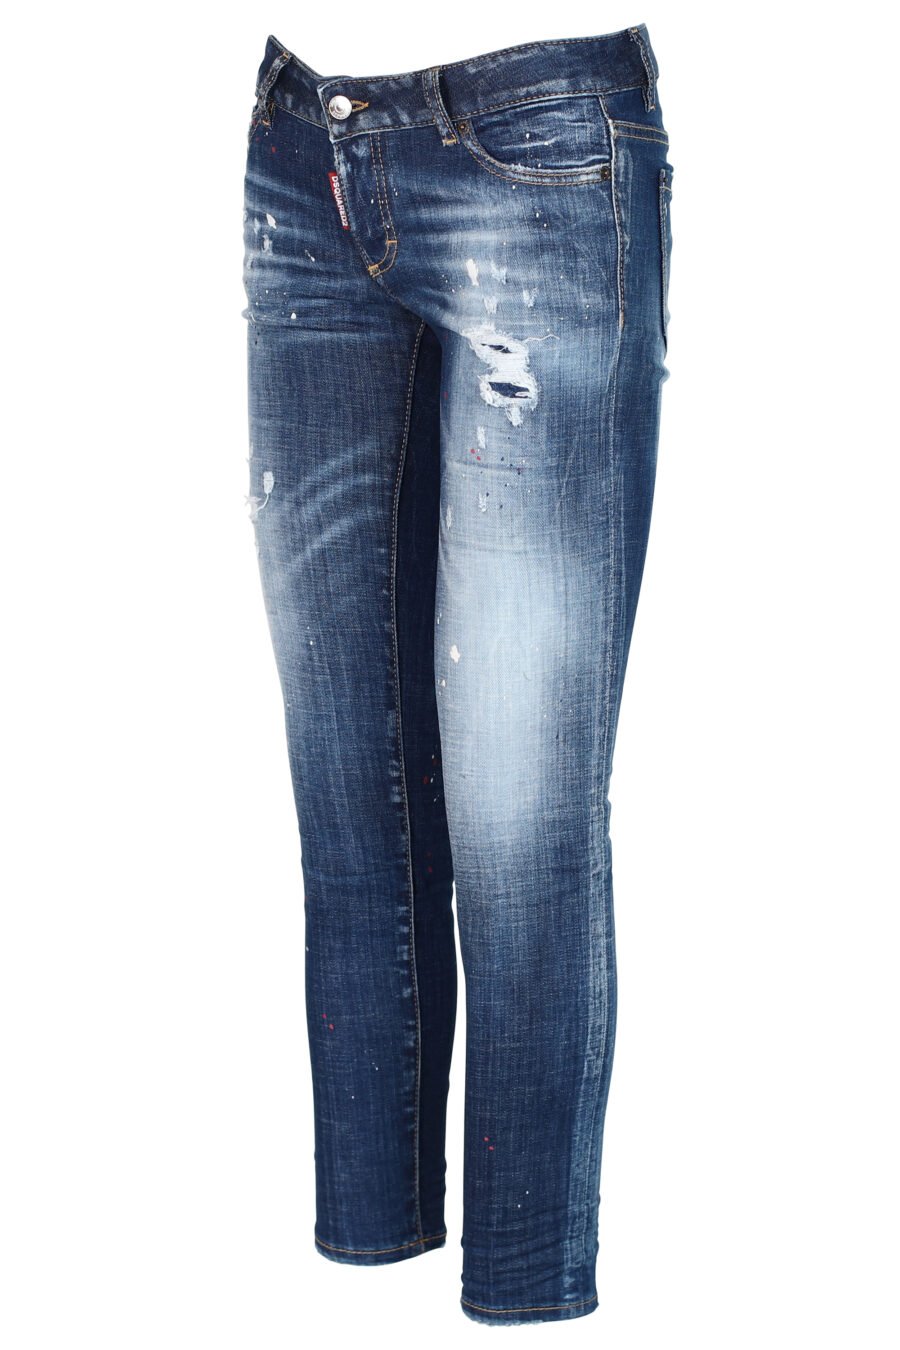 Jeans "Jennifer Jean" blue with splash paint and worn effect - 8052134937259 2